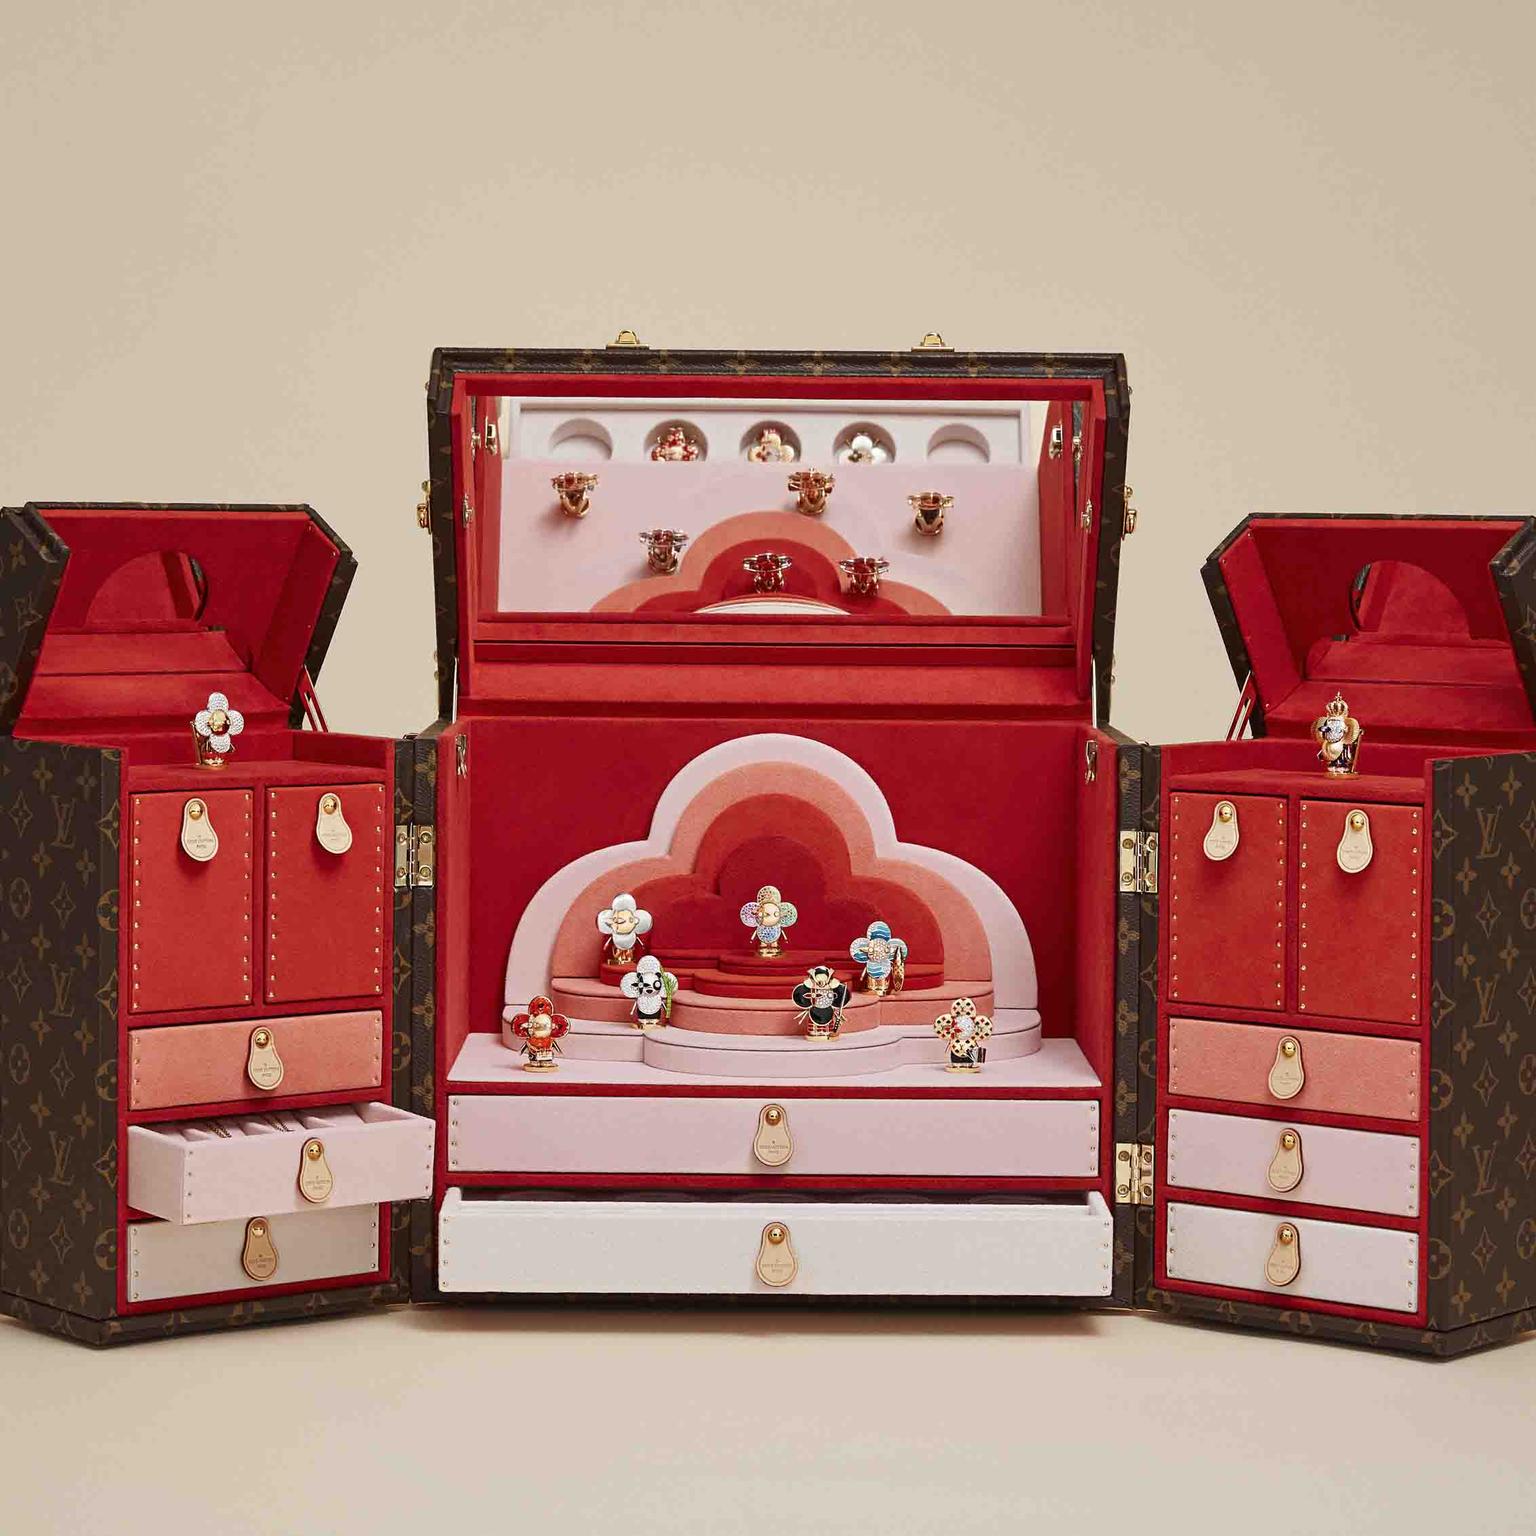 LV Inspired Jewelry Box # FS-O-7